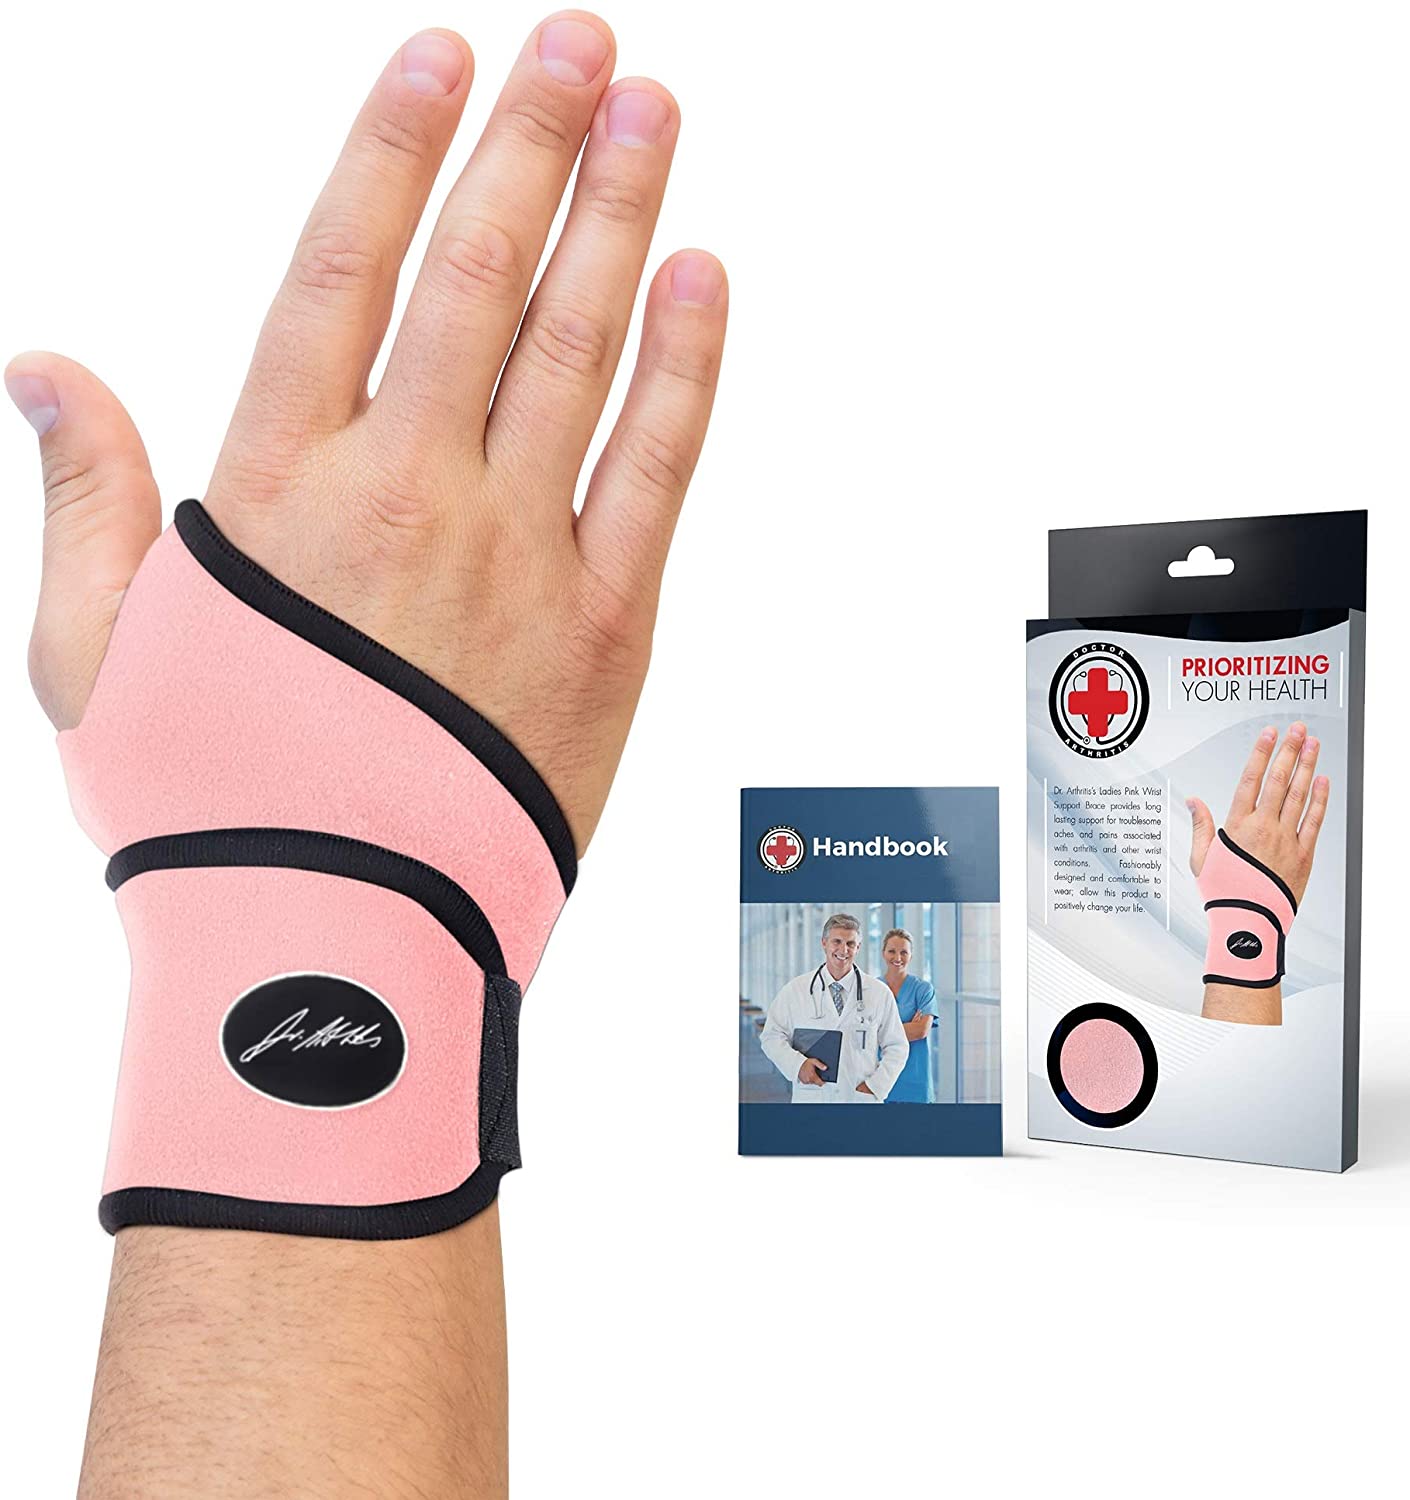 Doctor Developed Premium Ladies Wrist Support/Wrist Strap/Wrist Brace/Hand Support [Single] & DOCTOR WRITTEN HANDBOOK- RELIEF for Wrist Injuries, Arthritis, Sprains & More (Pink) - e4cents